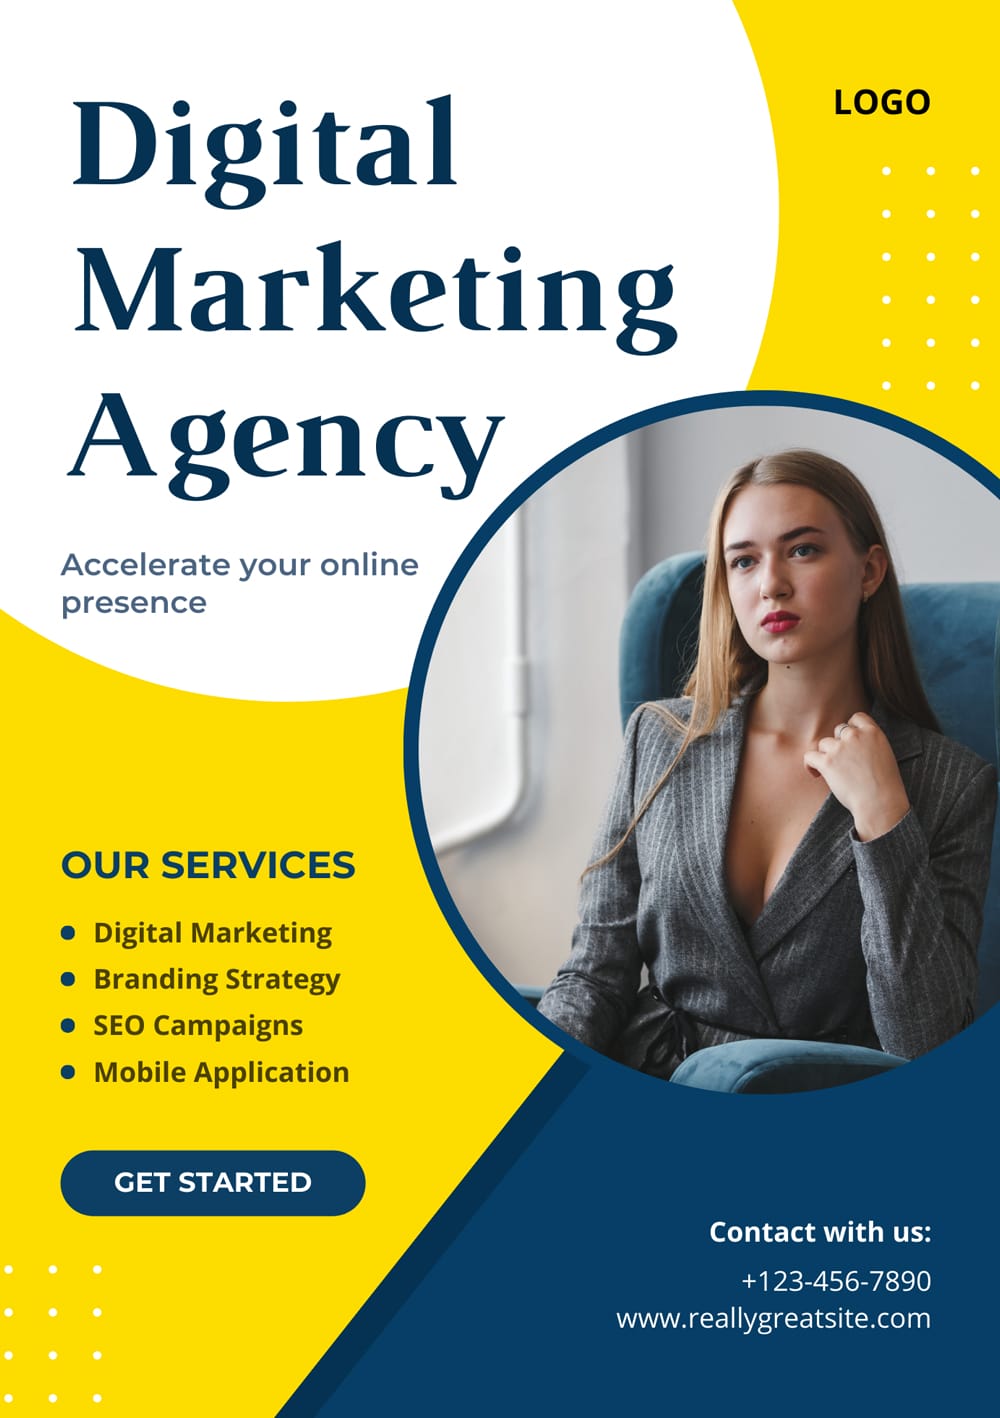 Digital Marketing Agency Flyer Template